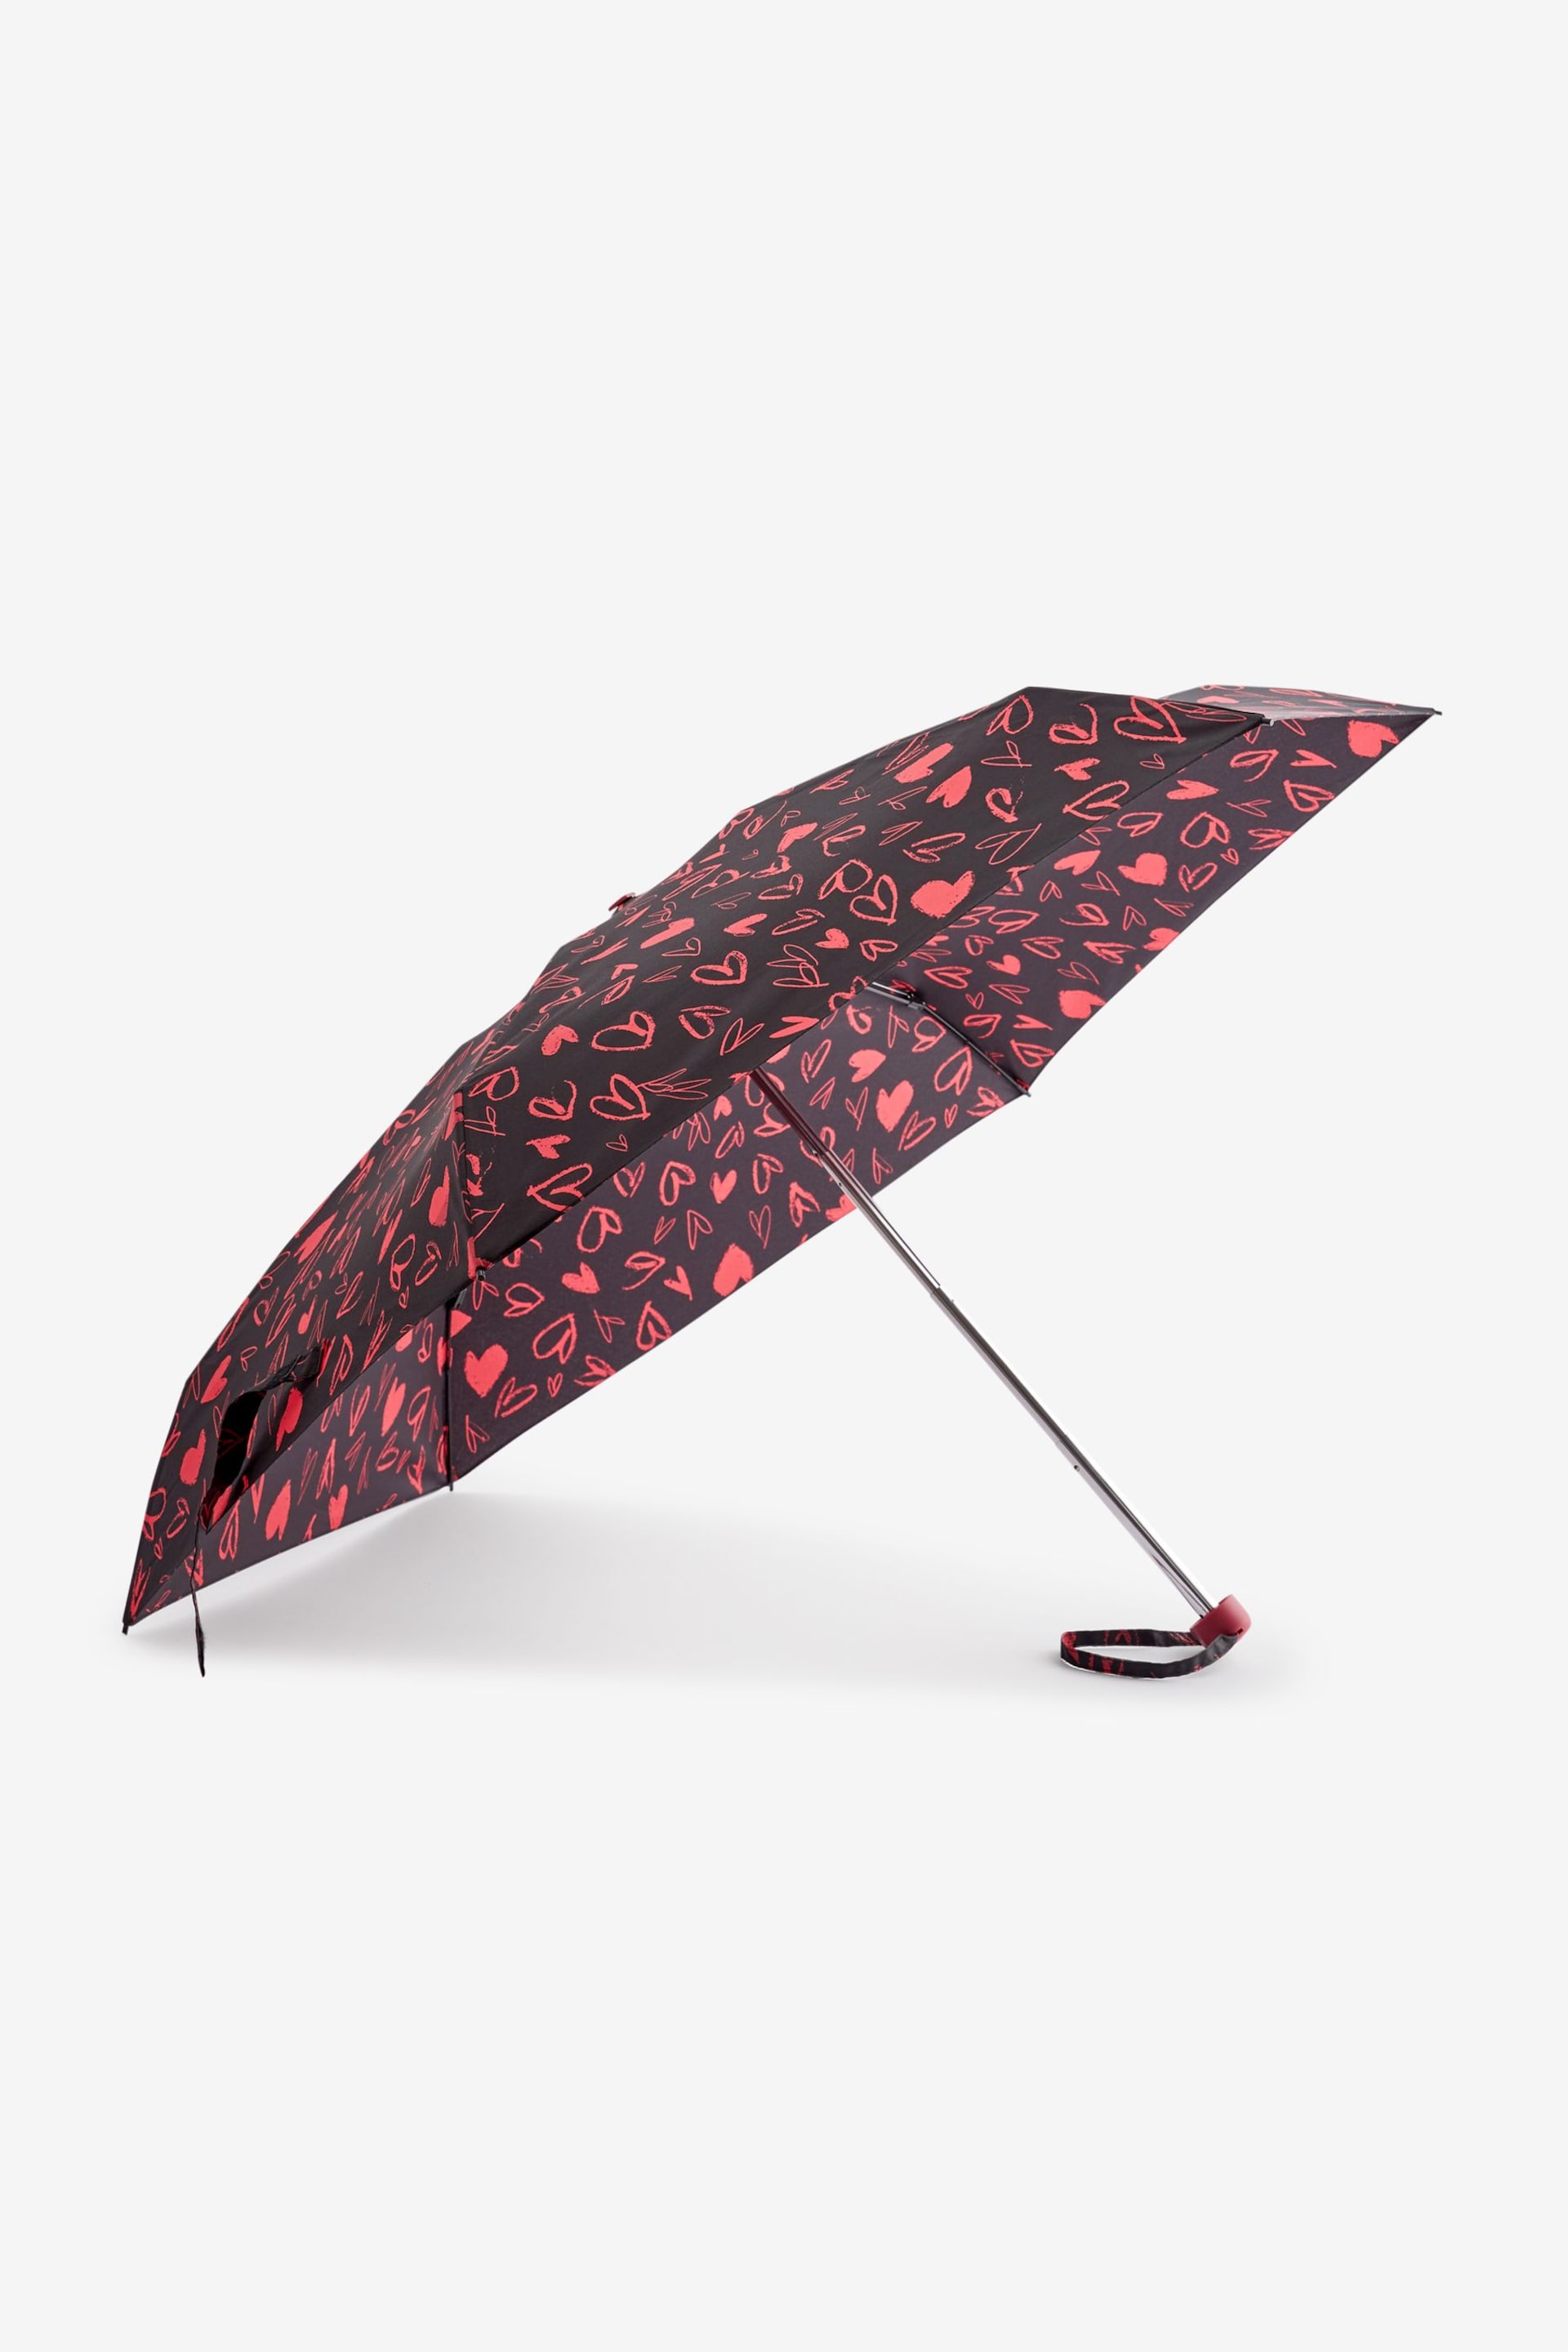 Black/Red Compact Umbrella - Image 2 of 3